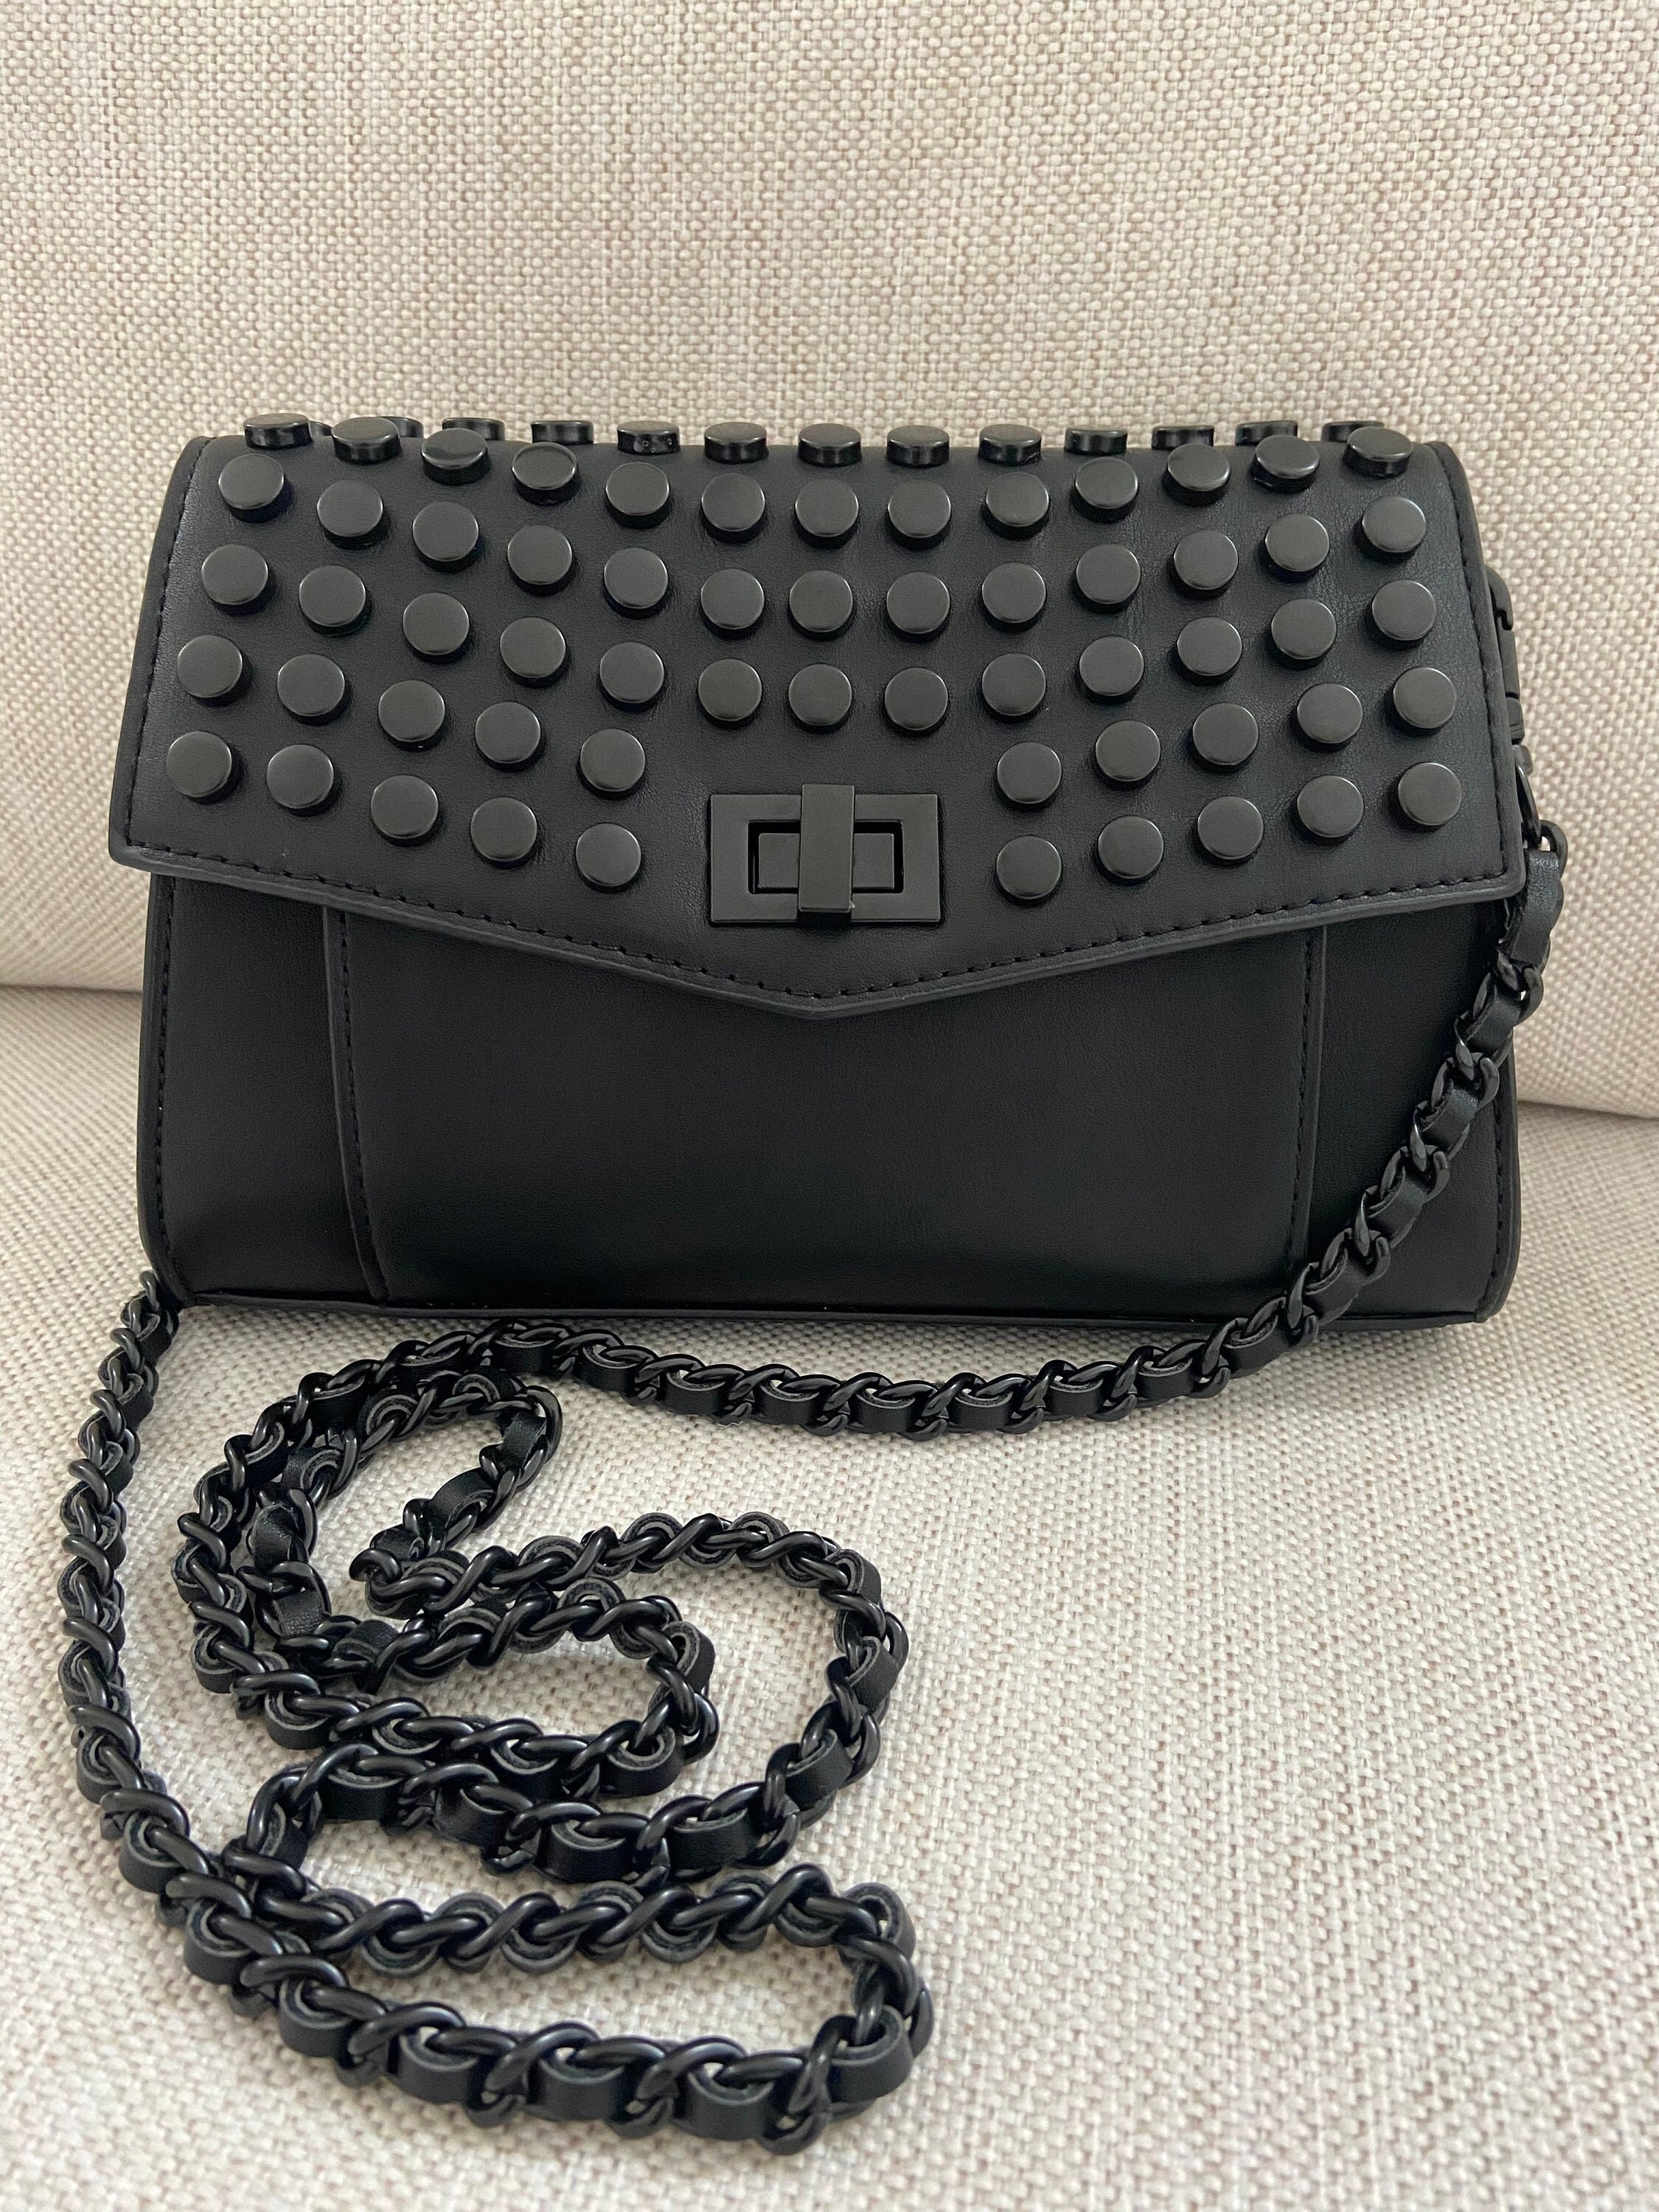 KARRESLY Women's PU Leather Shoulder Bag Black Clutch Bag Cross Body Bags  Purse(Black): Handbags: Amazon.com